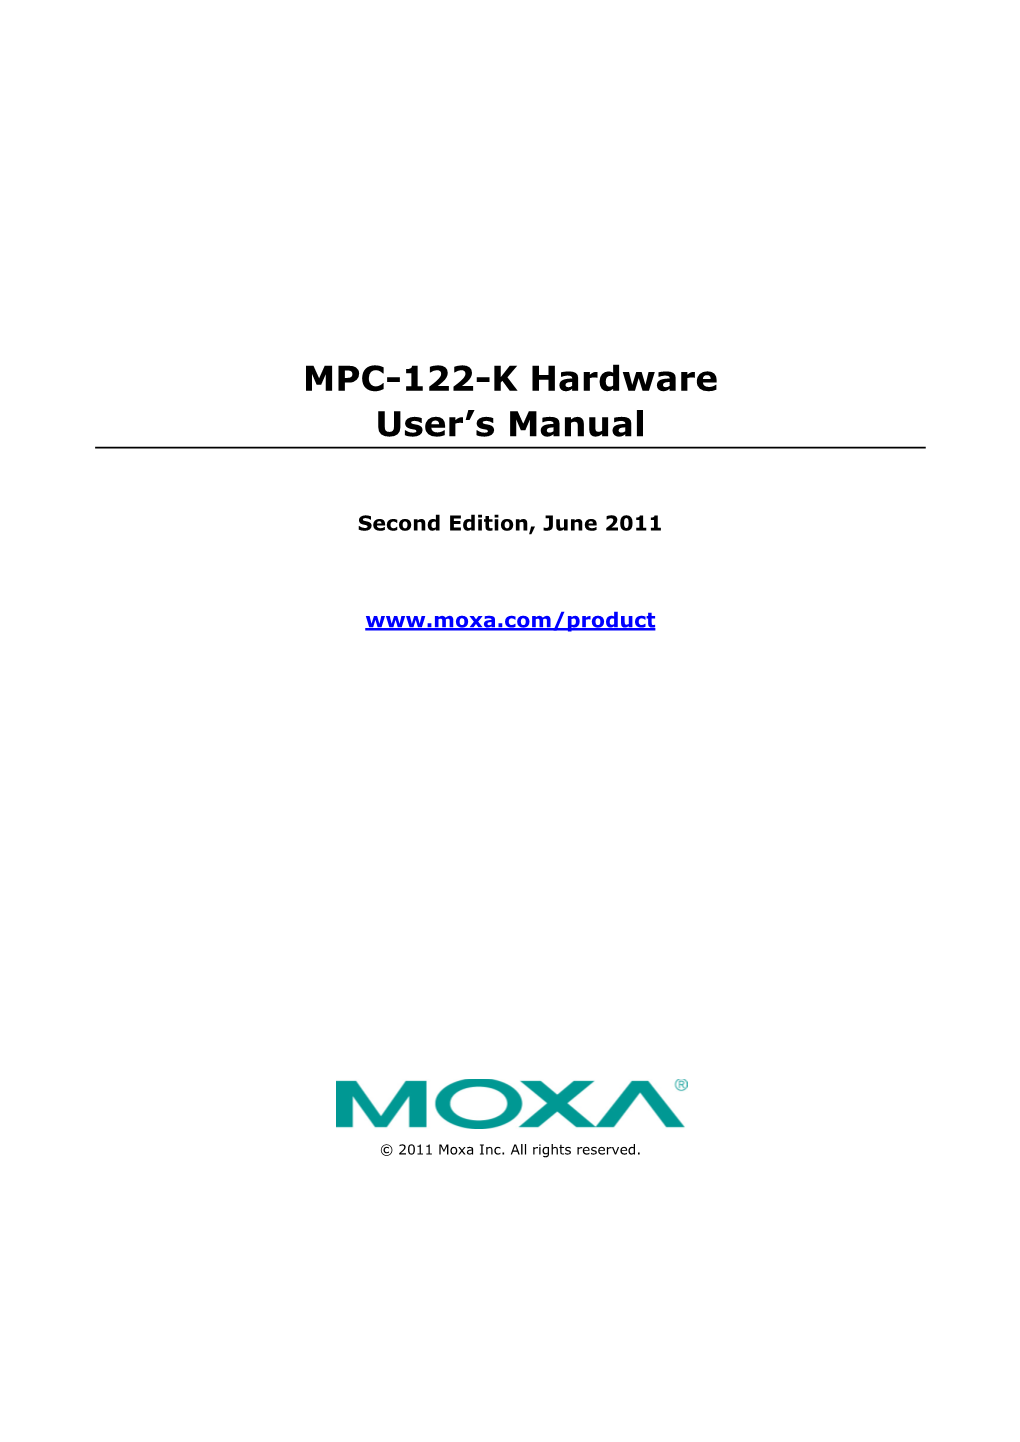 MPC-122-K Hardware User's Manual